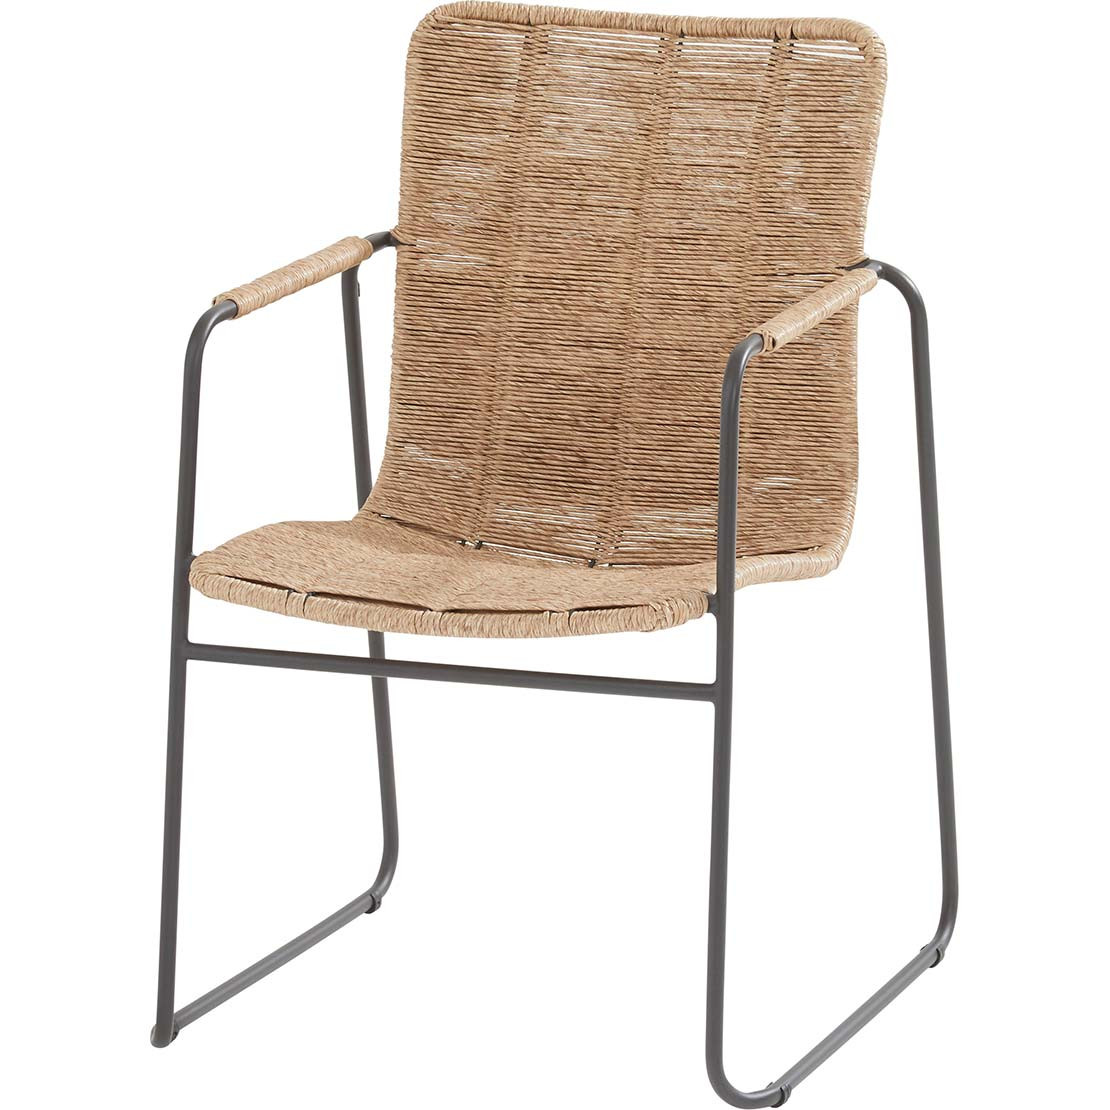 huid leef ermee rok Palma stacking chair Natural